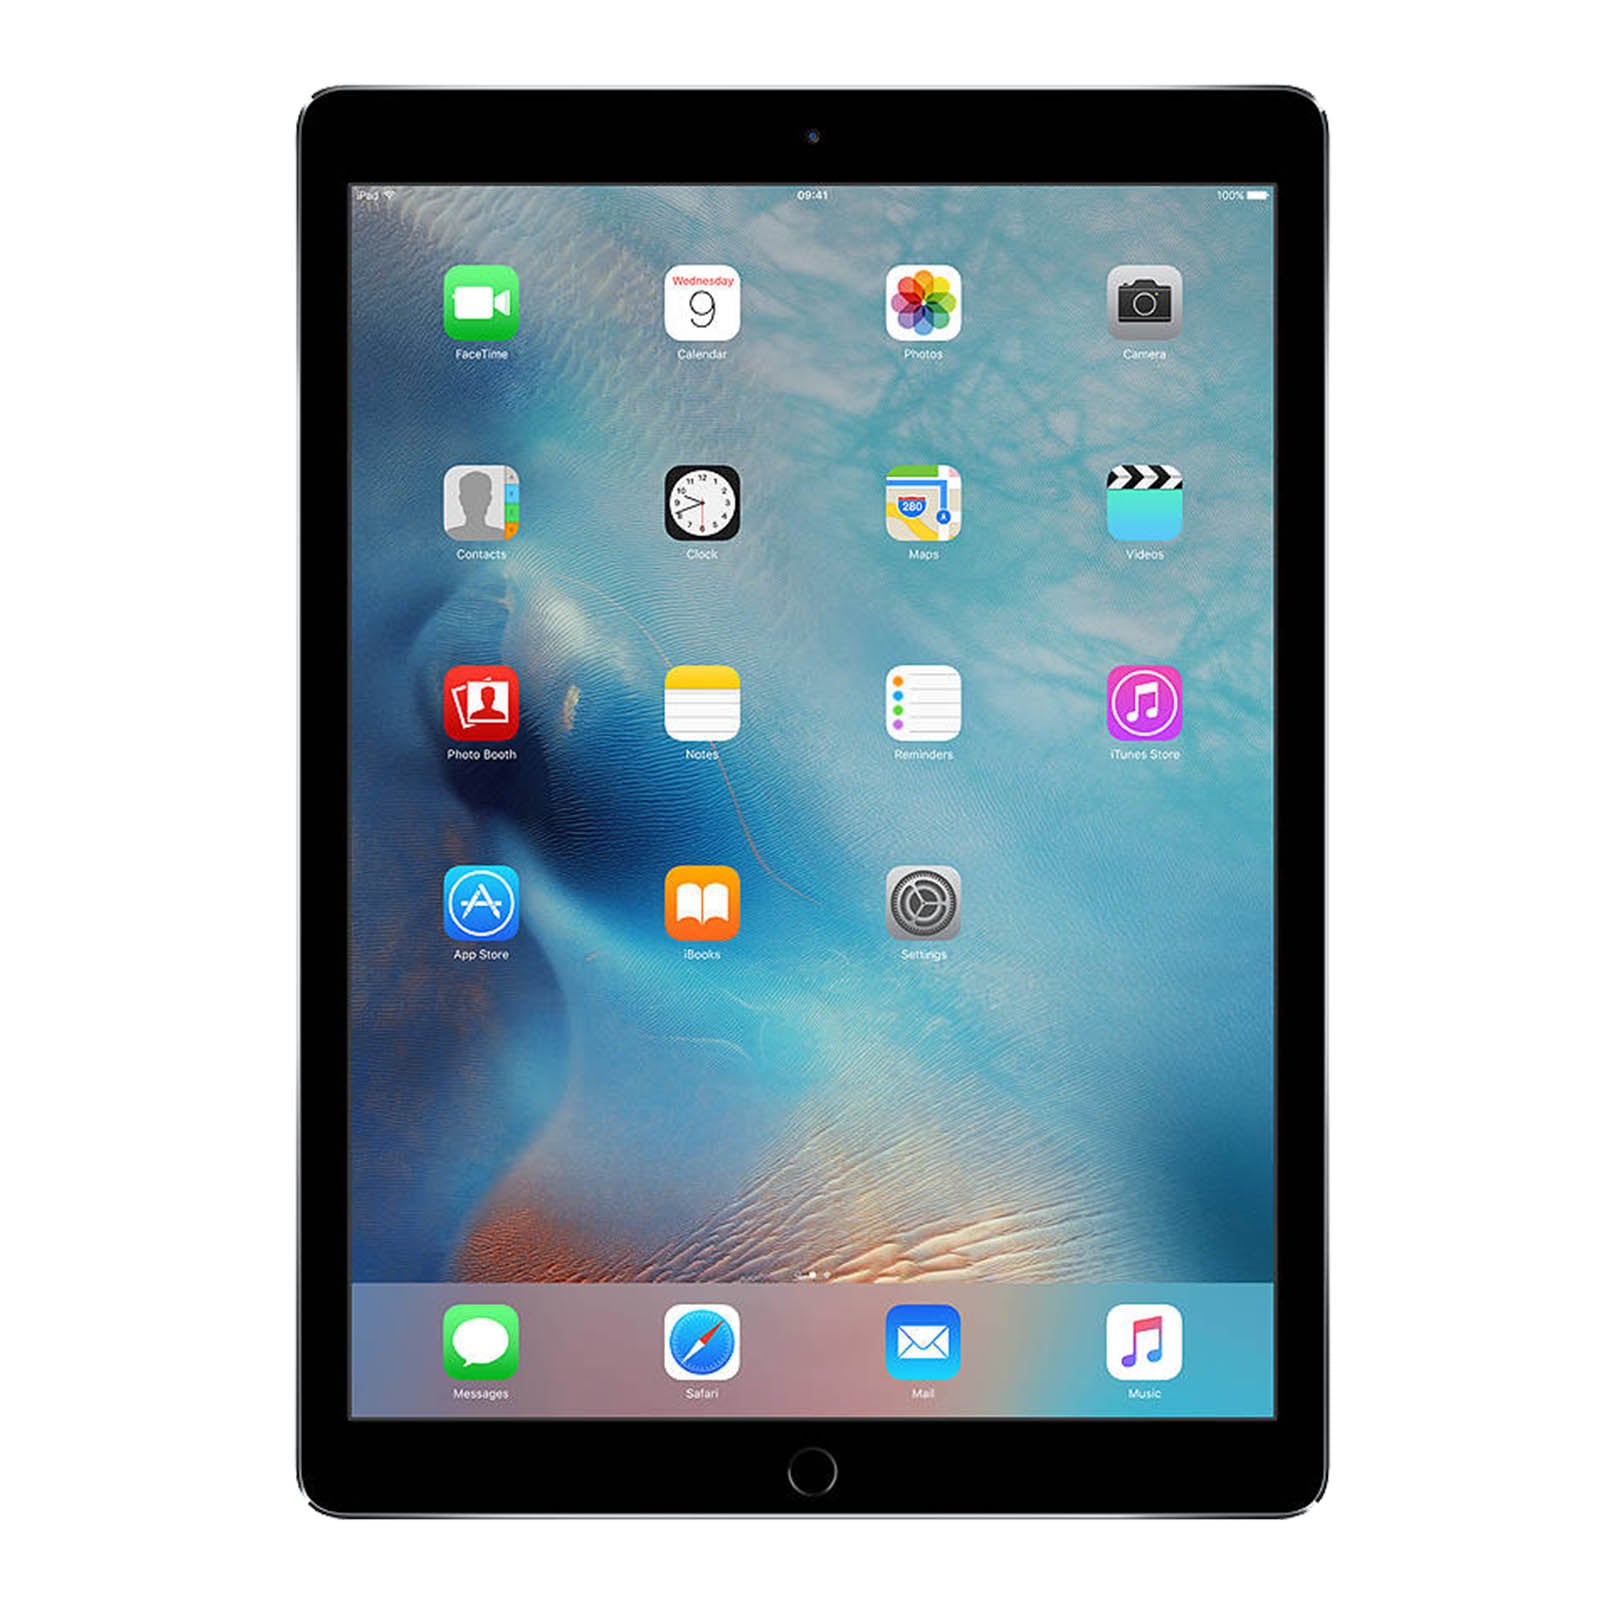 iPad Pro 12.9 Inch 2nd Gen 64GB Space Grey Very Good - Unlocked